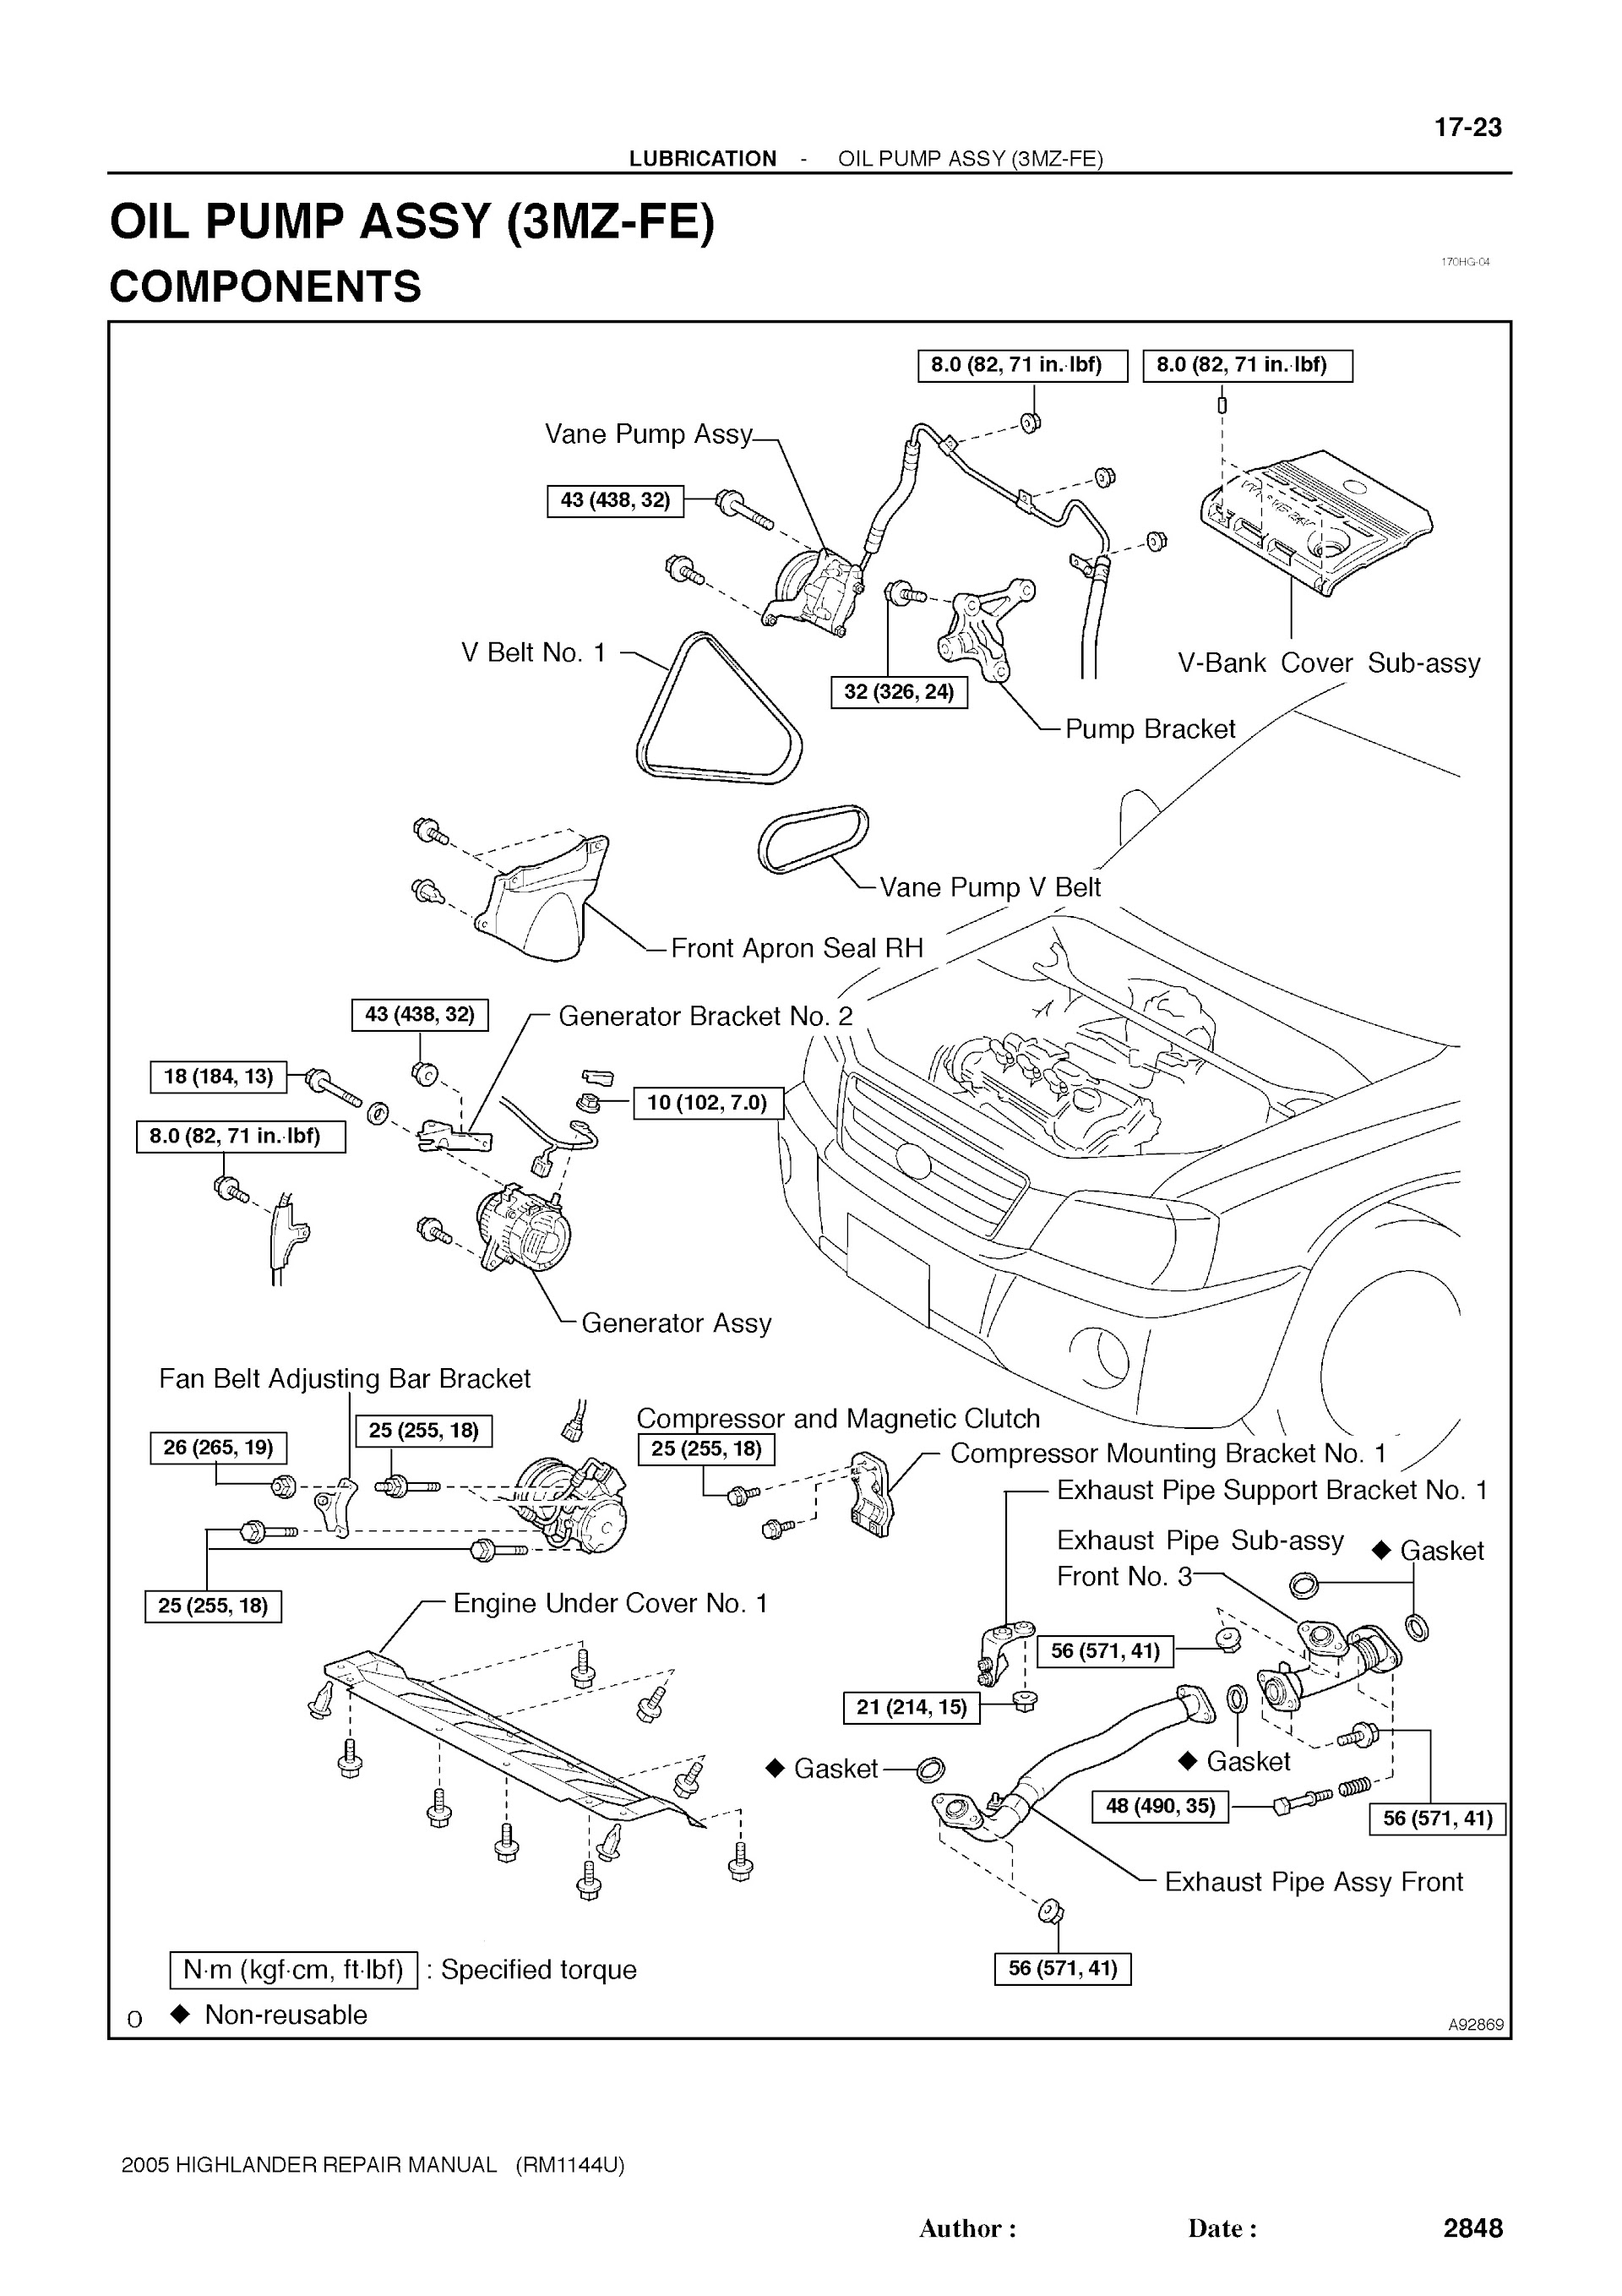 2001-2007 Toyota Highlander Repair Manual, Oil Pump Assy (3MZ-FE)